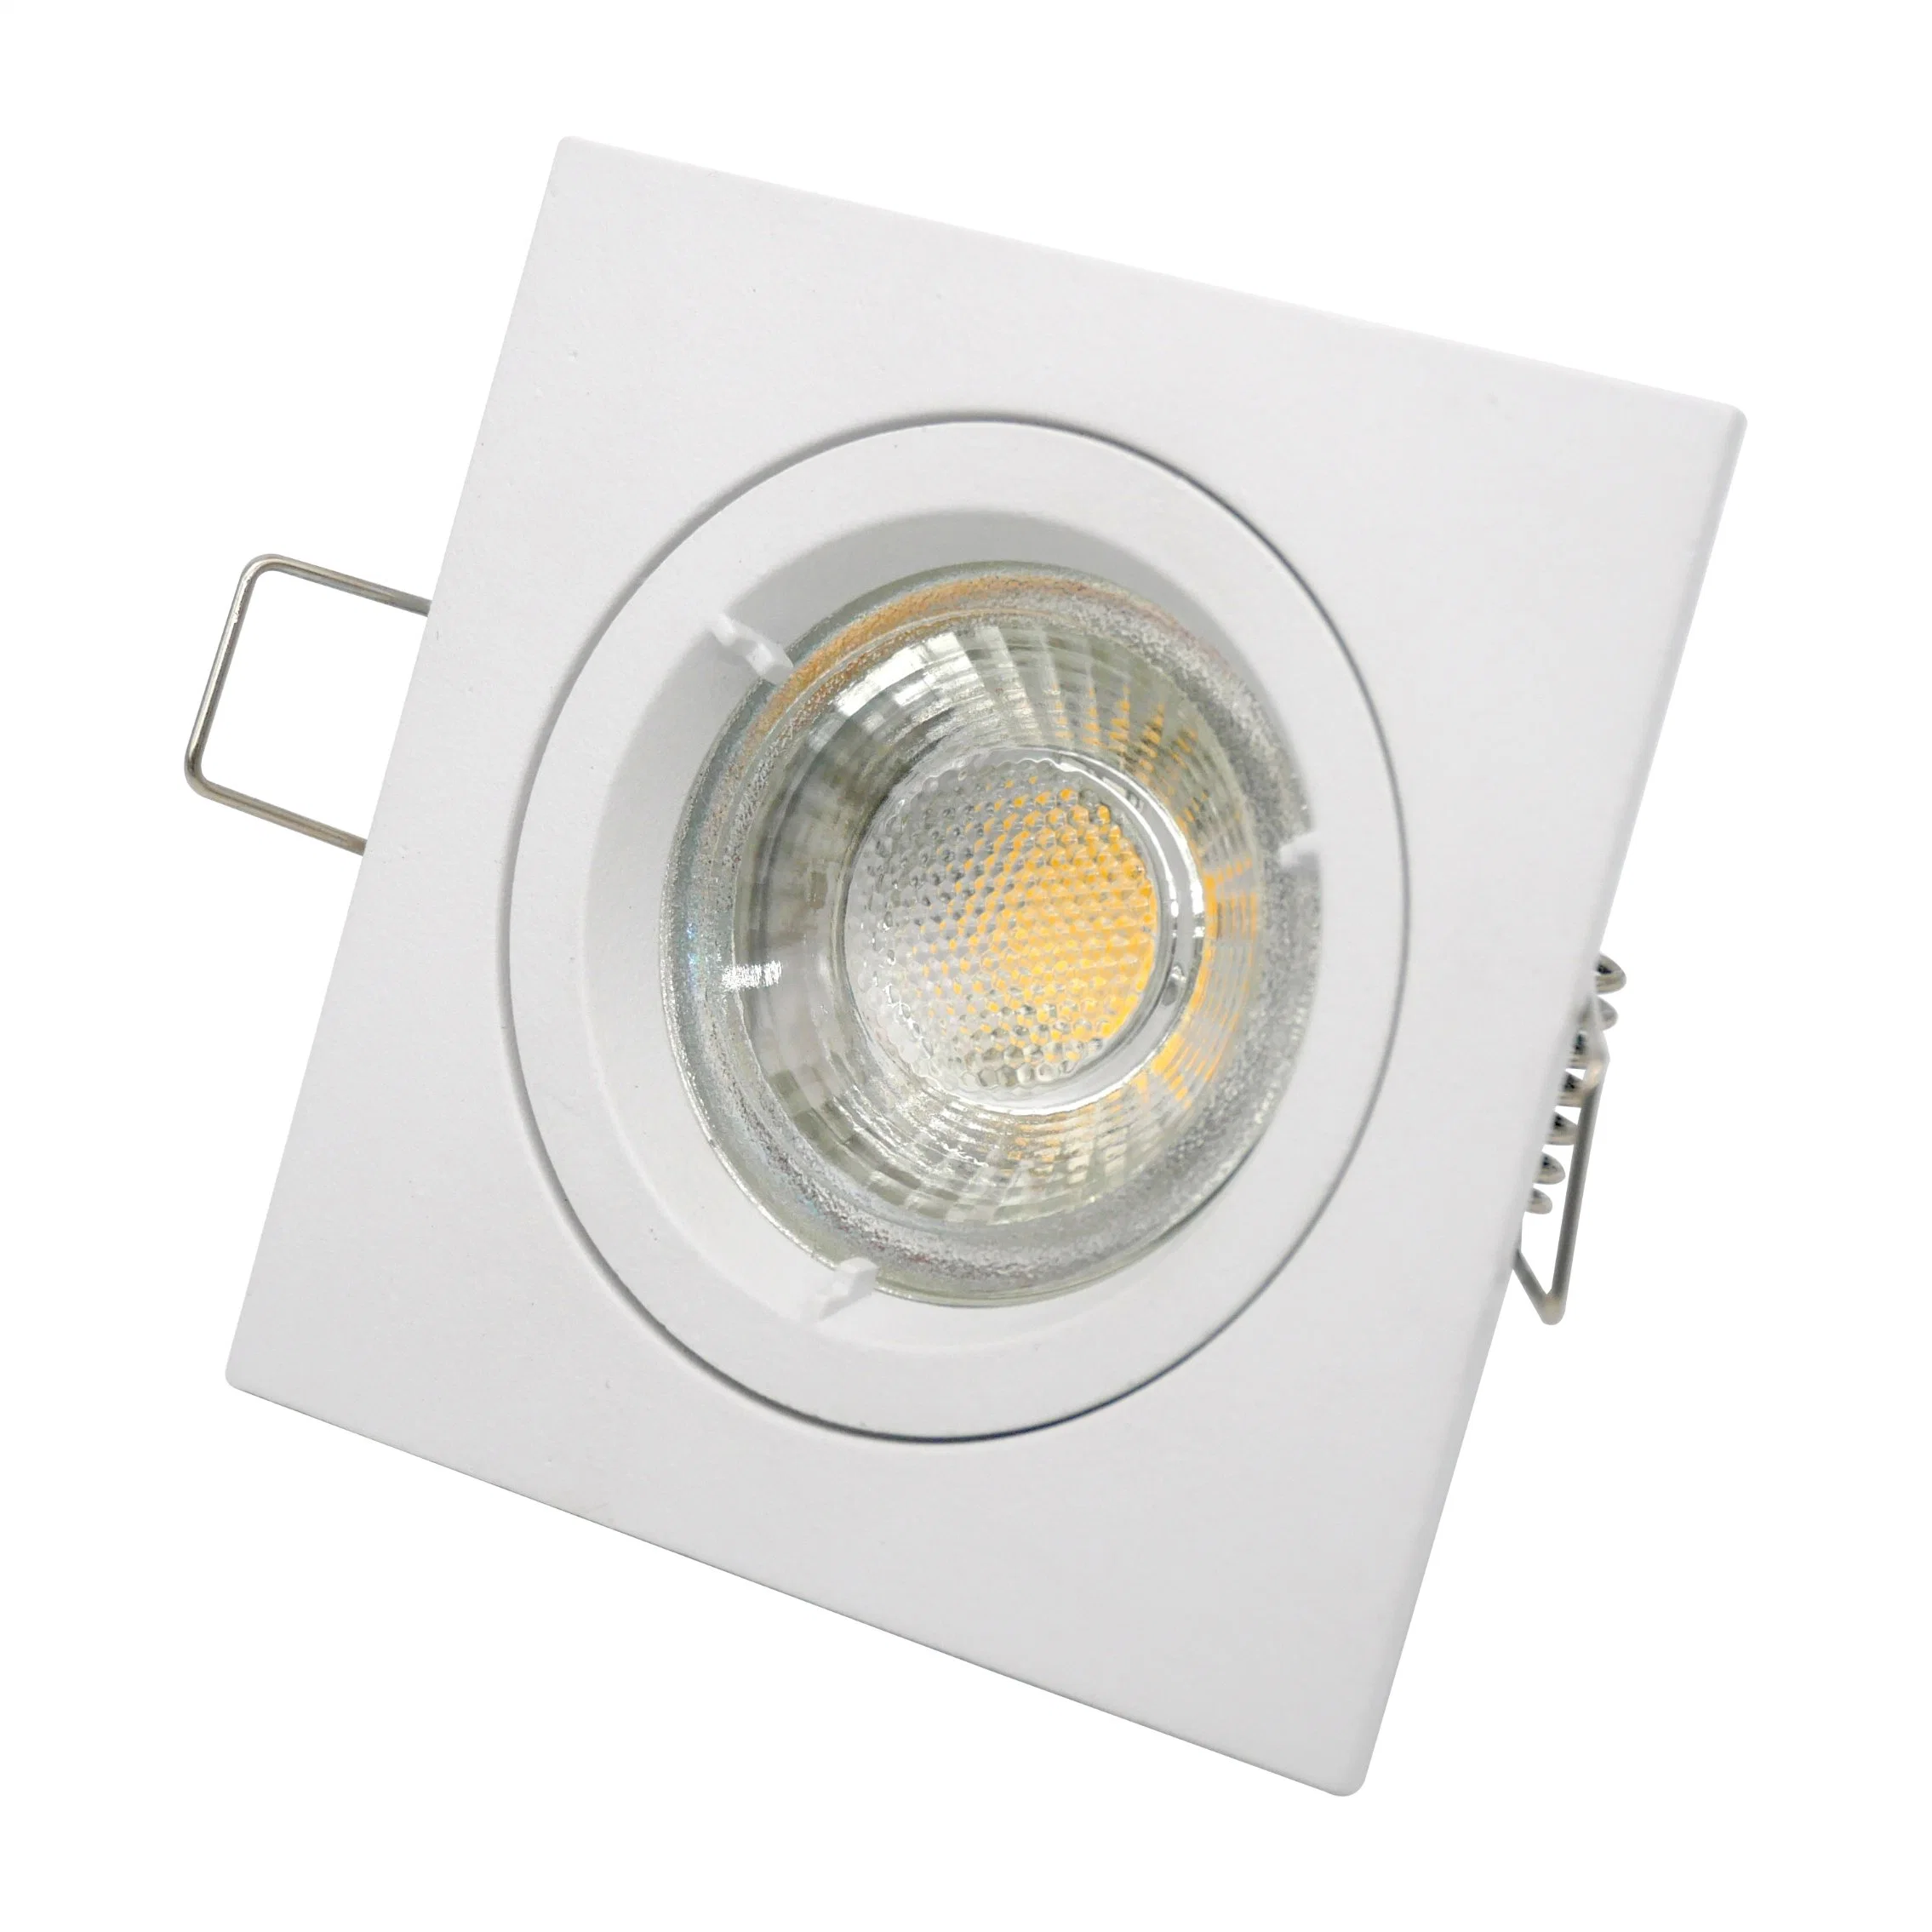 Aluminum MR16 GU10 LED Halogen Square Recessed Spotlight Ceiling Light Fixture Downlight